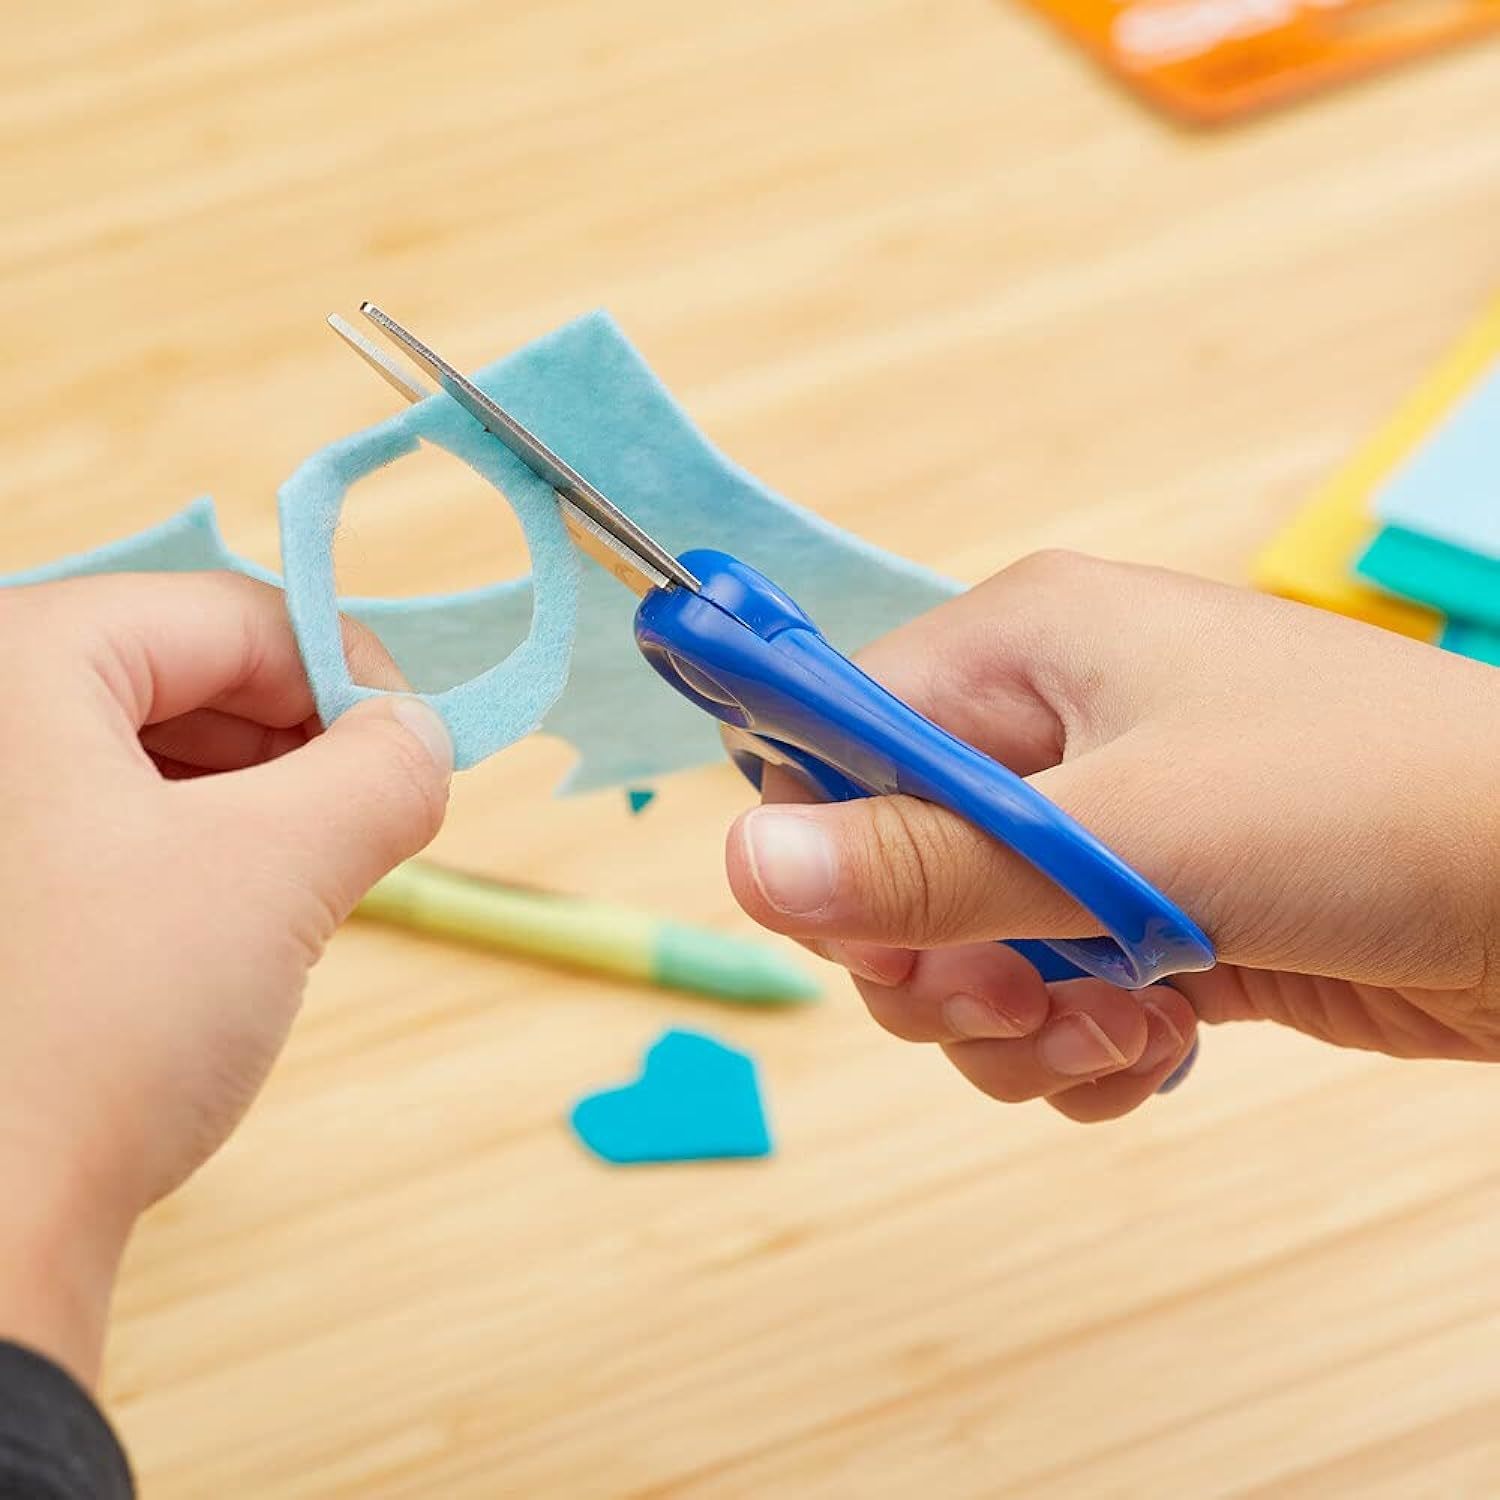 Fiskars Pointed Tip 5 Scissors for Kids 4-7, School Supplies, Red